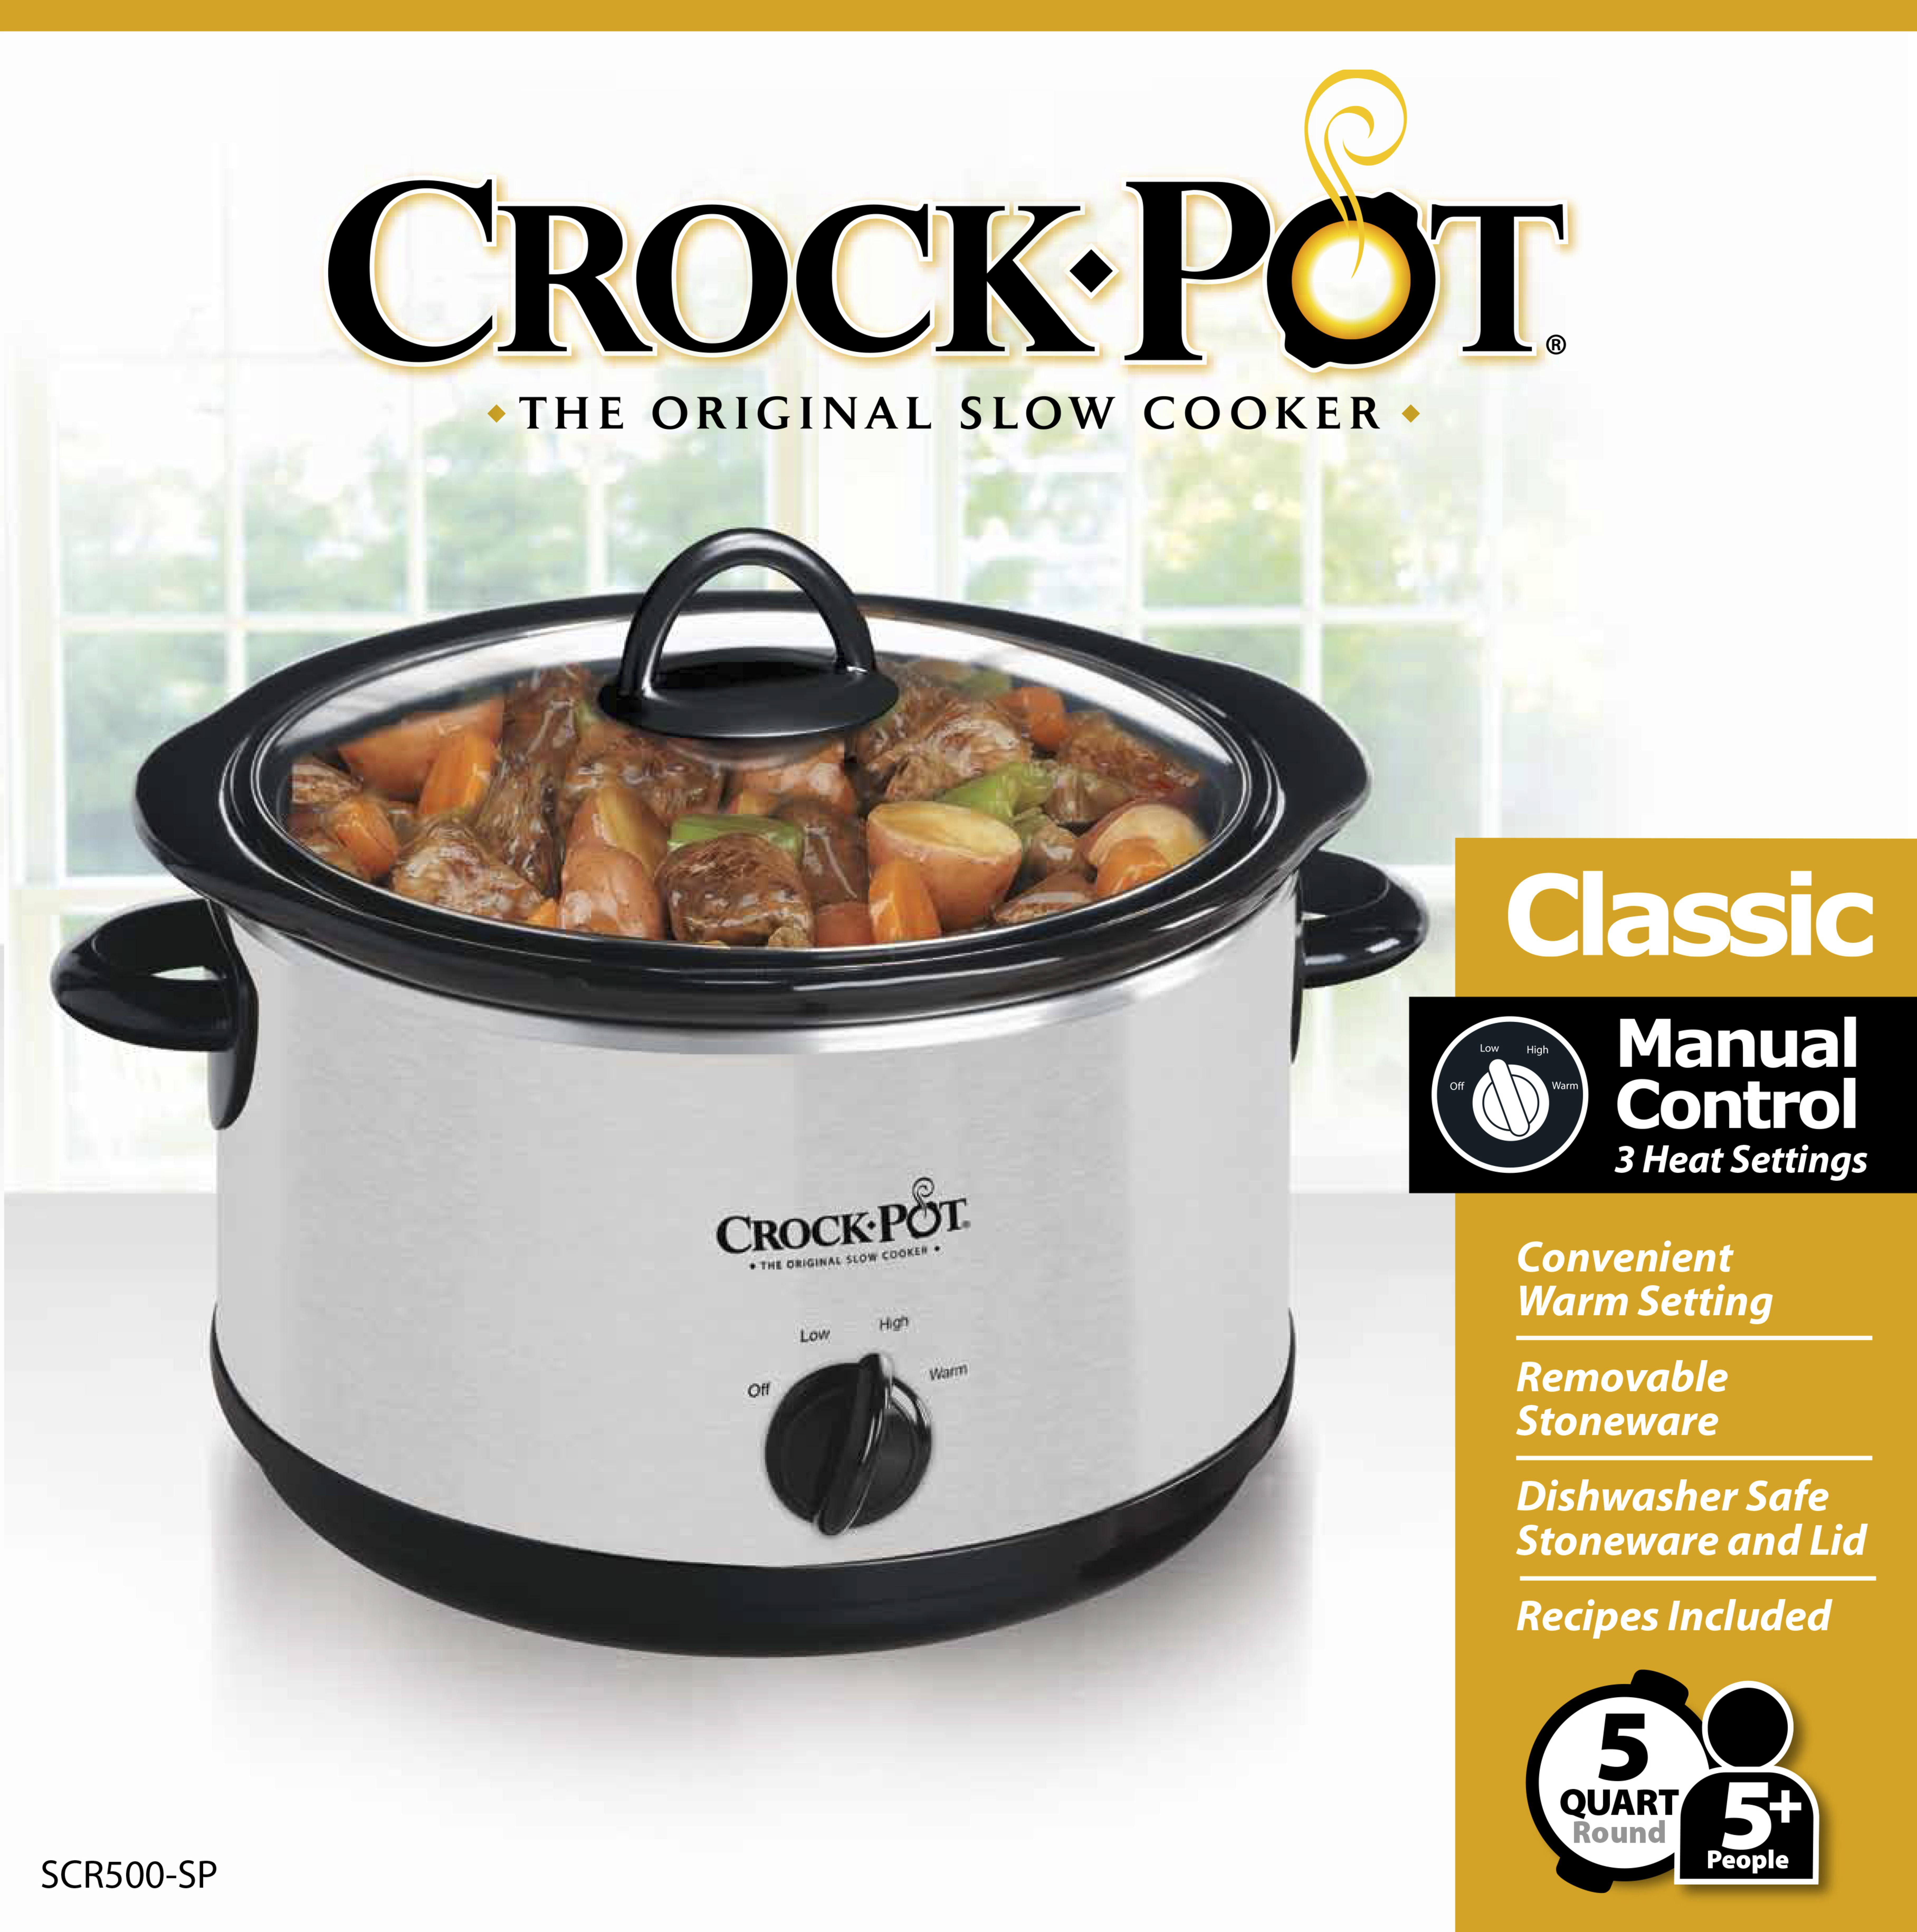 Crock-Pot Versaware Pro Slow Cooker SCV1600B-SS Review